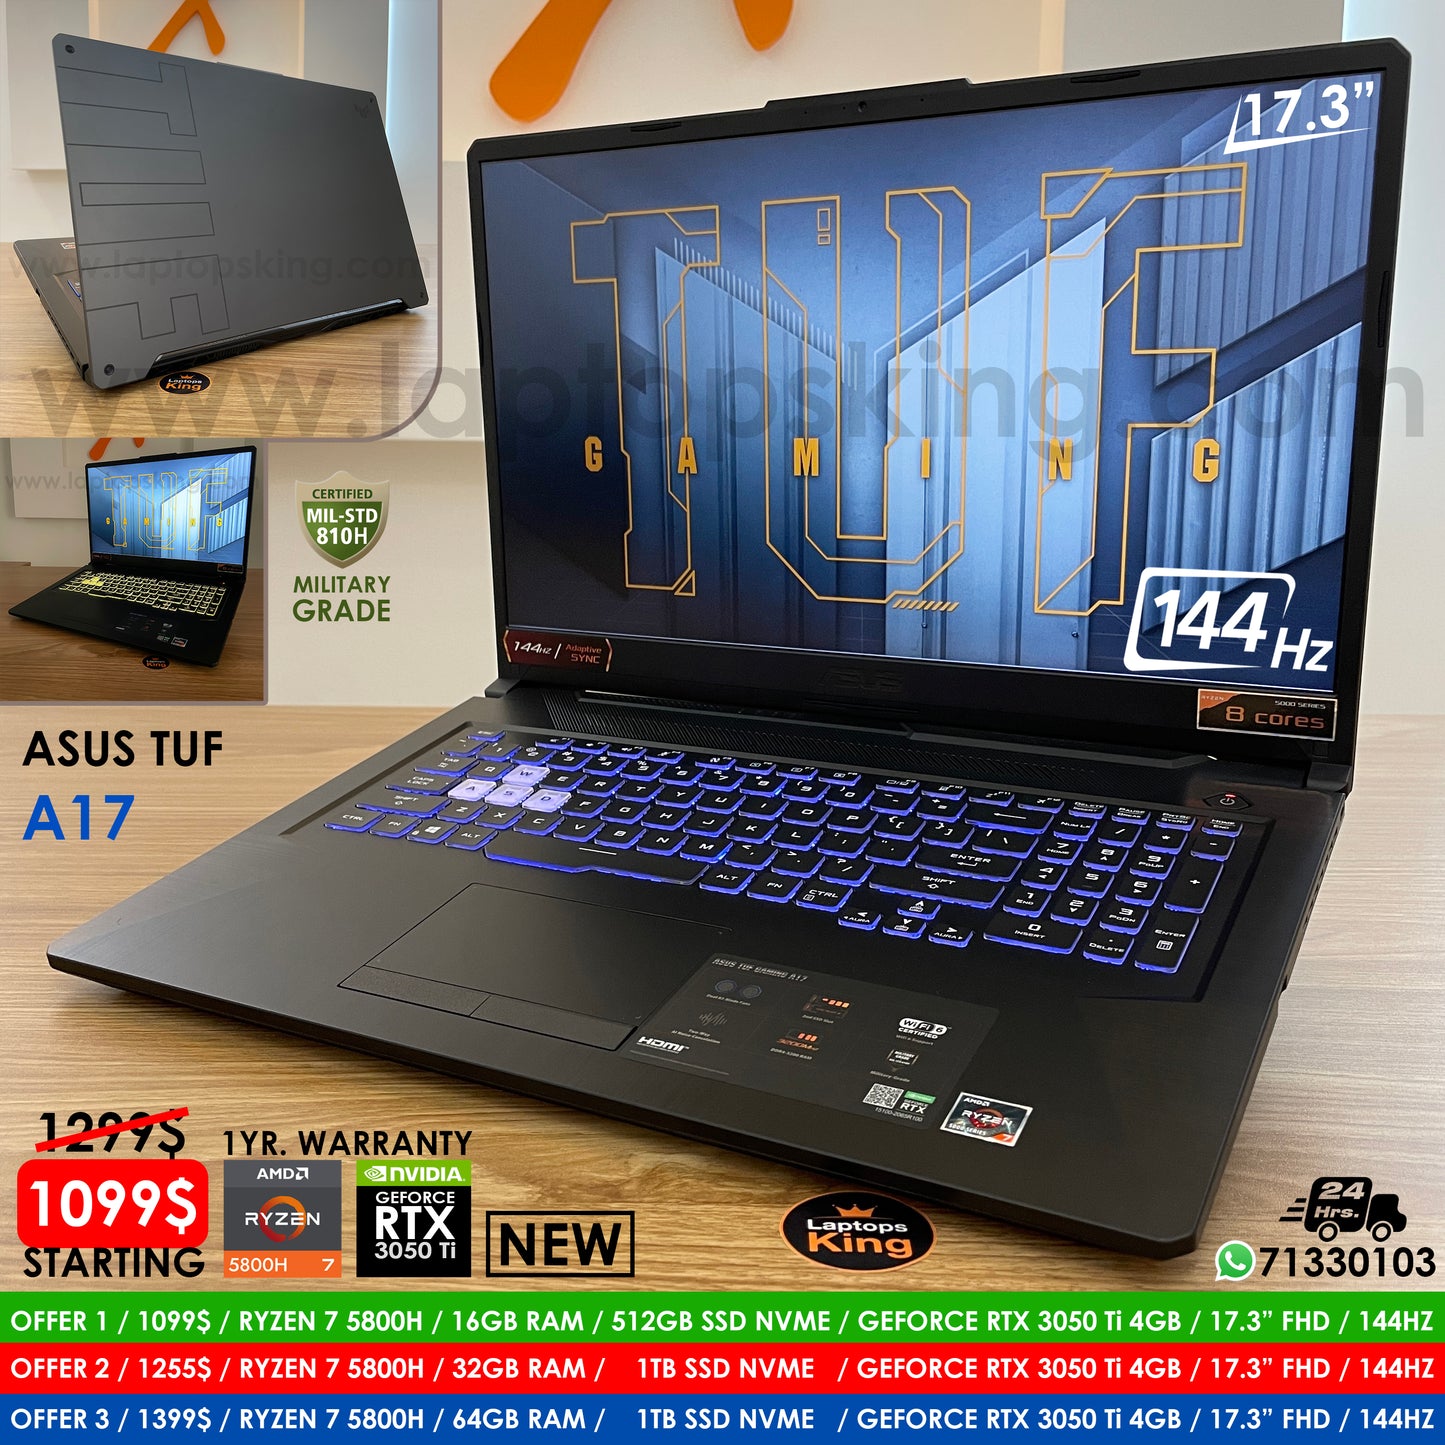 Asus Tuf A17 Military Grade Ryzen 7 5800H Rtx 3050 Ti 144Hz 17.3" Gaming Laptop (New)